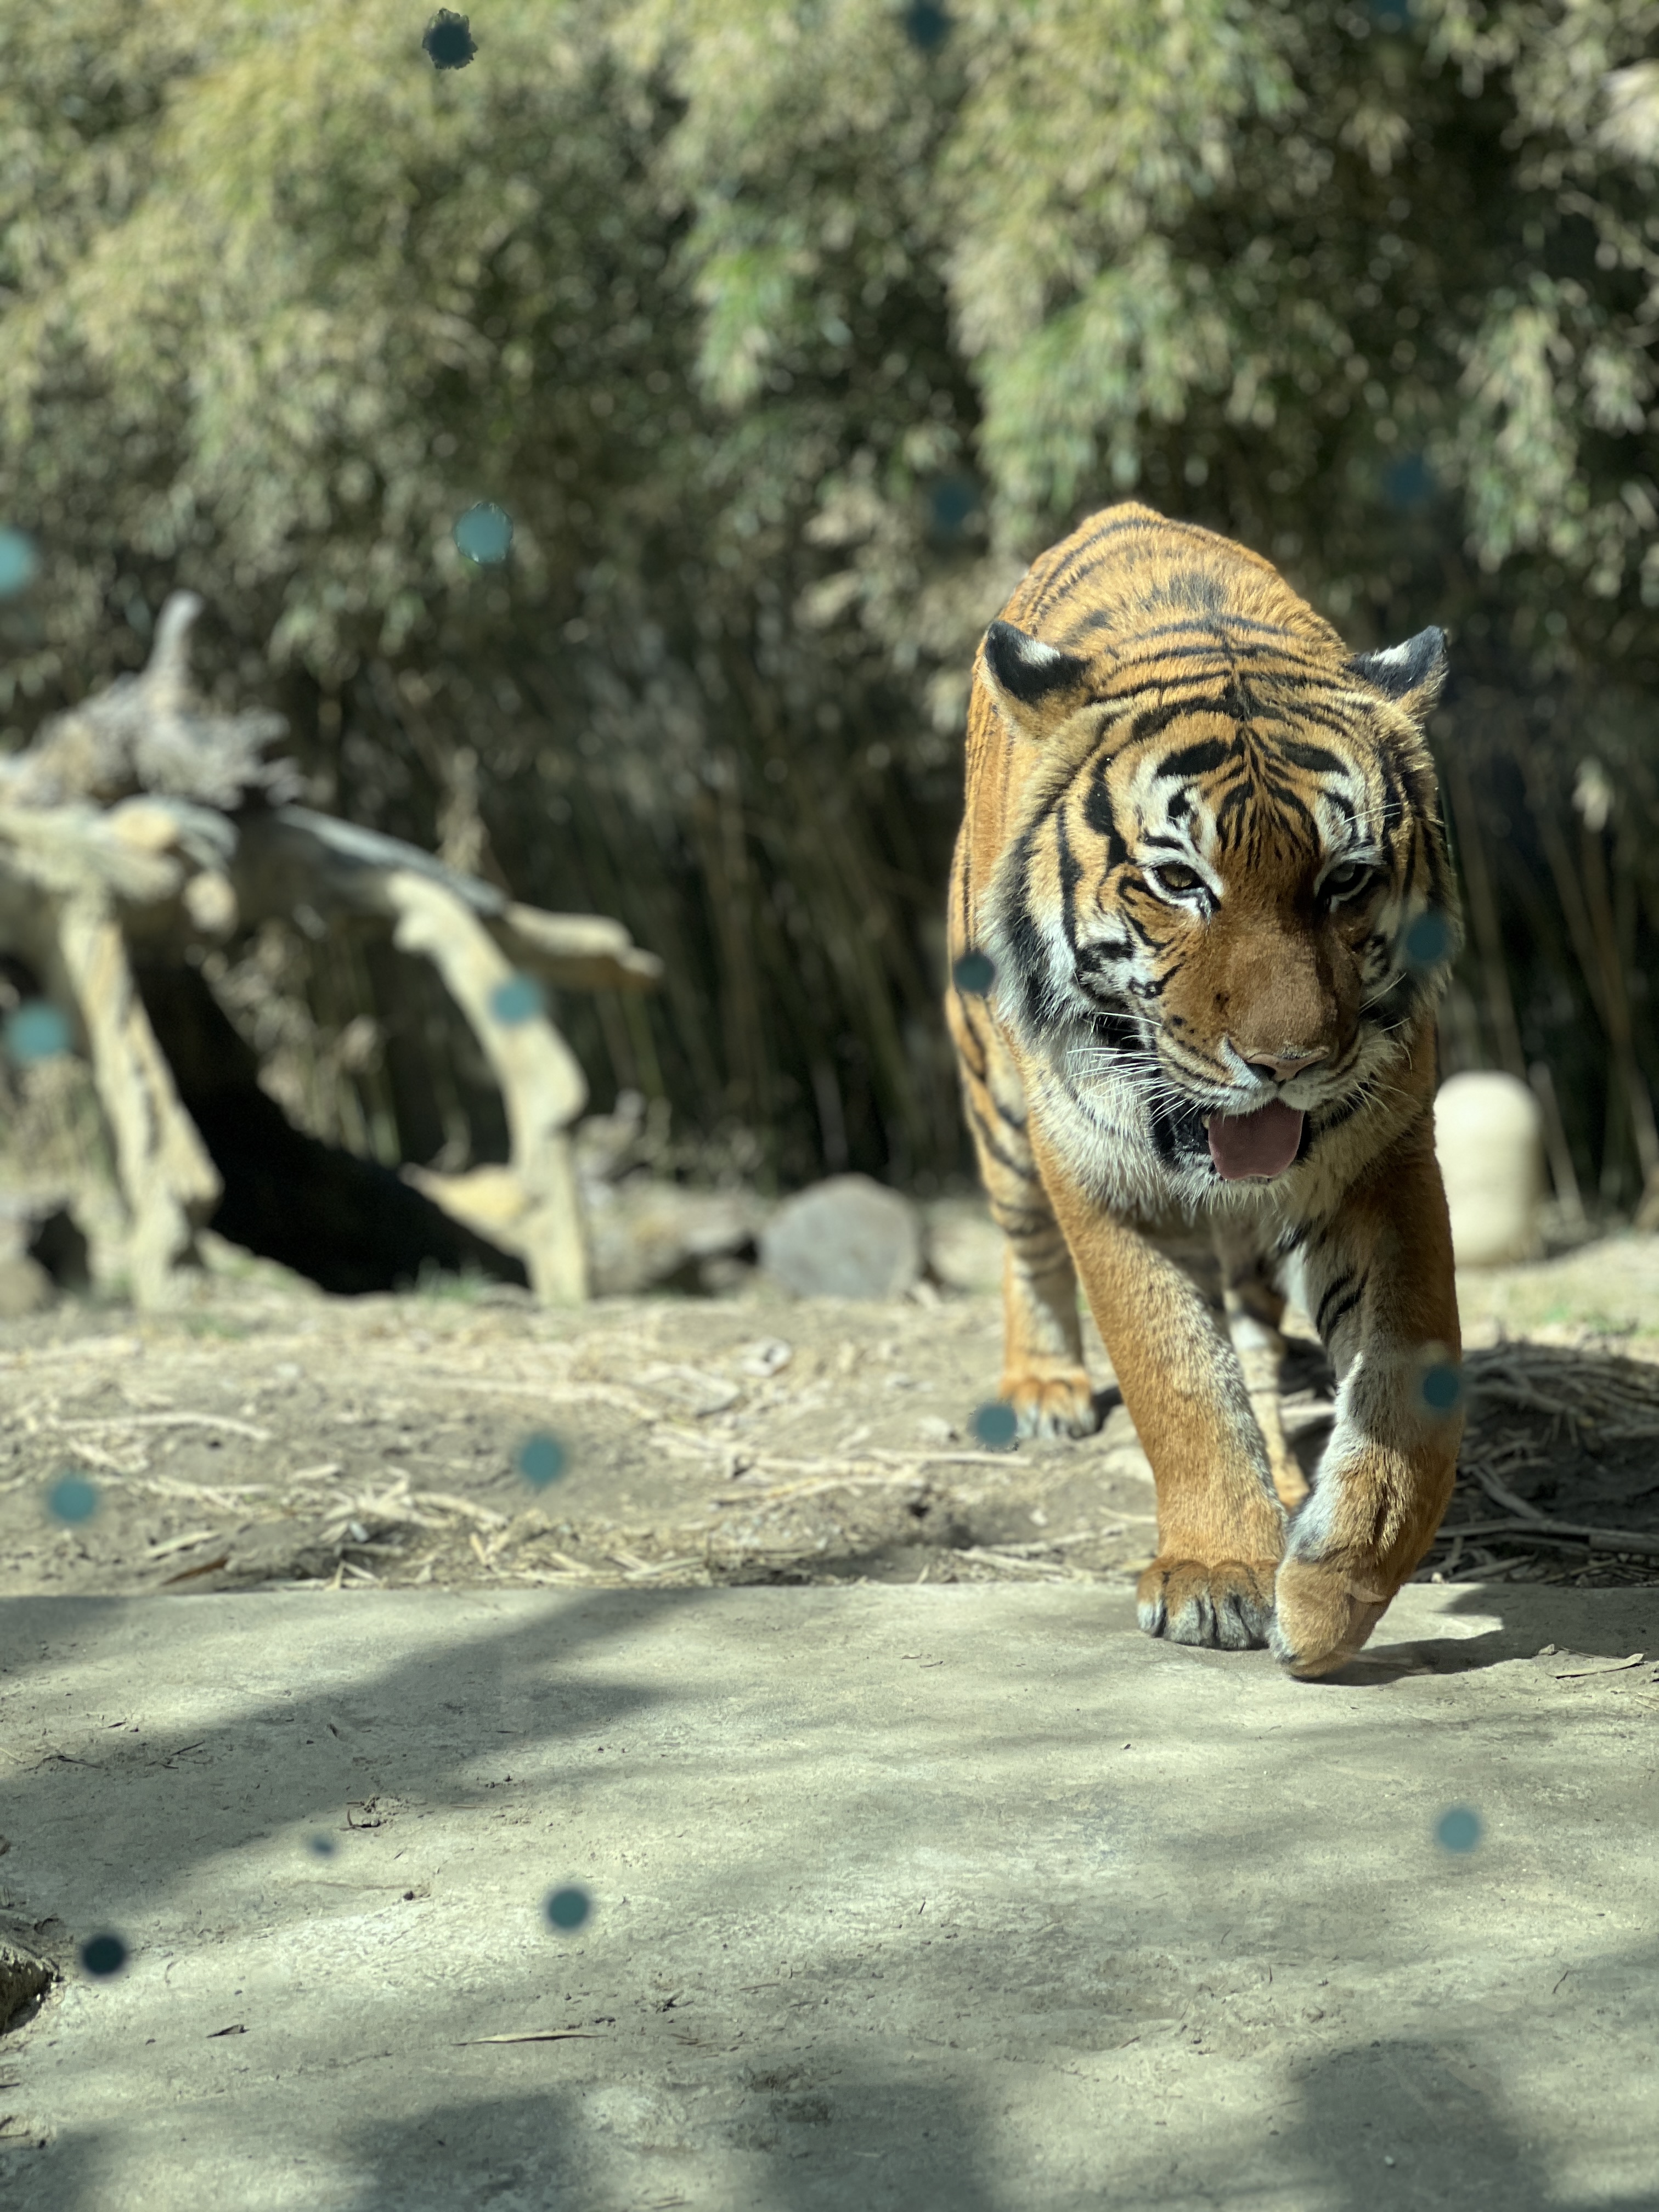 A tiger walking towards the screen.